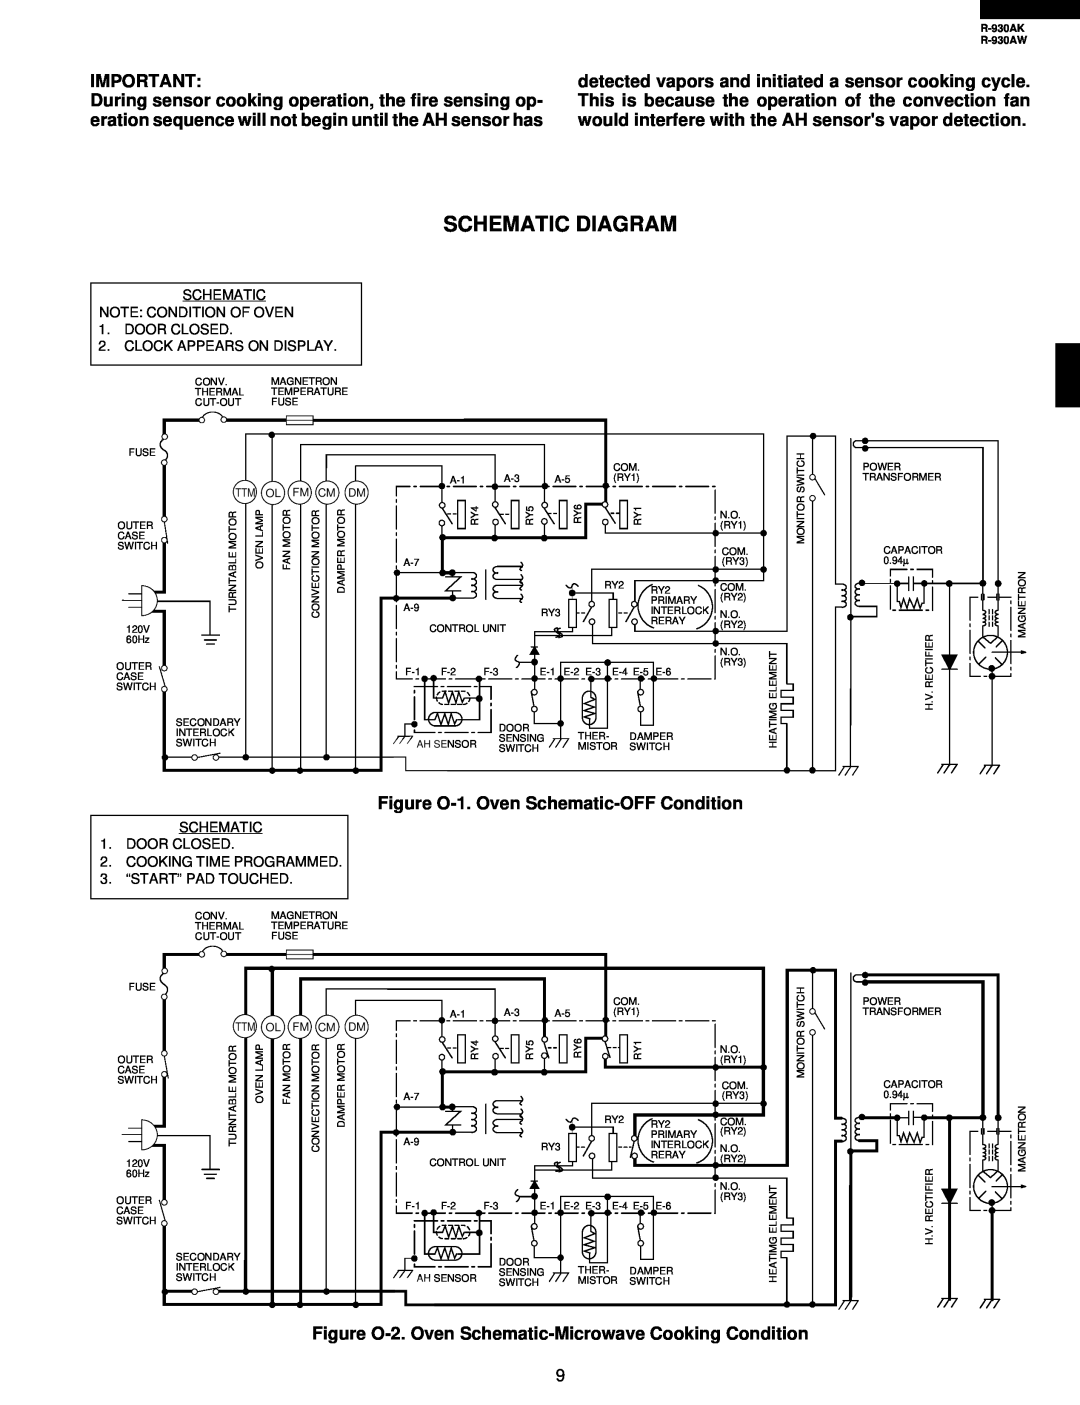 Sharp R-930AW service manual Schematic Diagram, Figure O-1. Oven Schematic-OFF Condition 